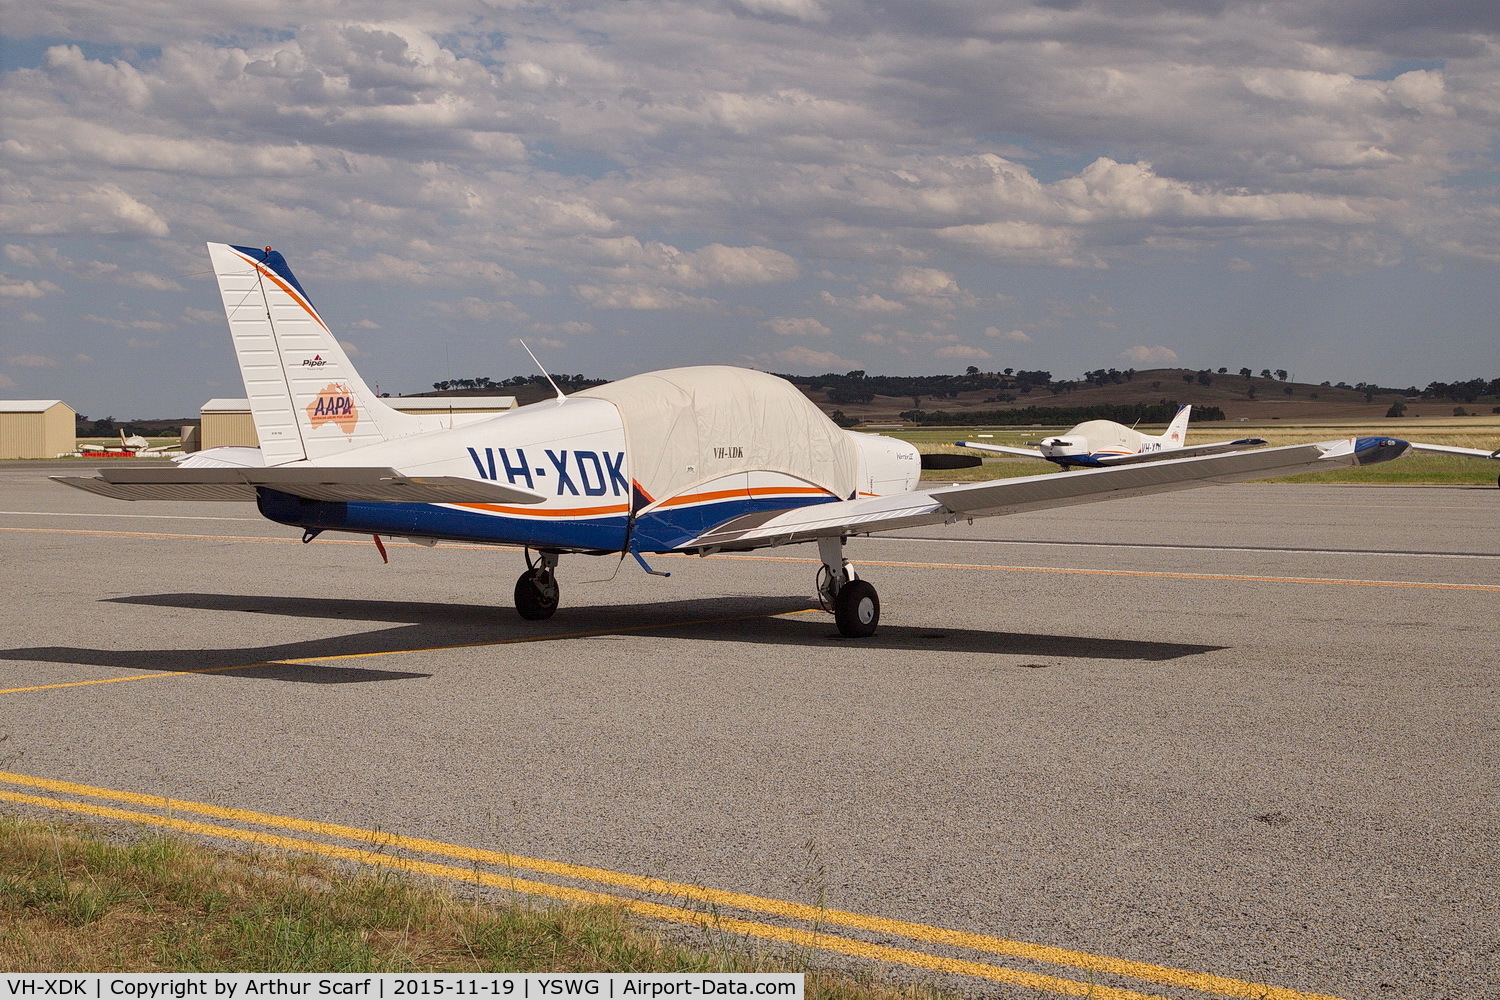 VH-XDK, 2008 Piper PA-28-161 Cherokee Warrior II C/N 2842304, Wagga Wagga Airport 2015